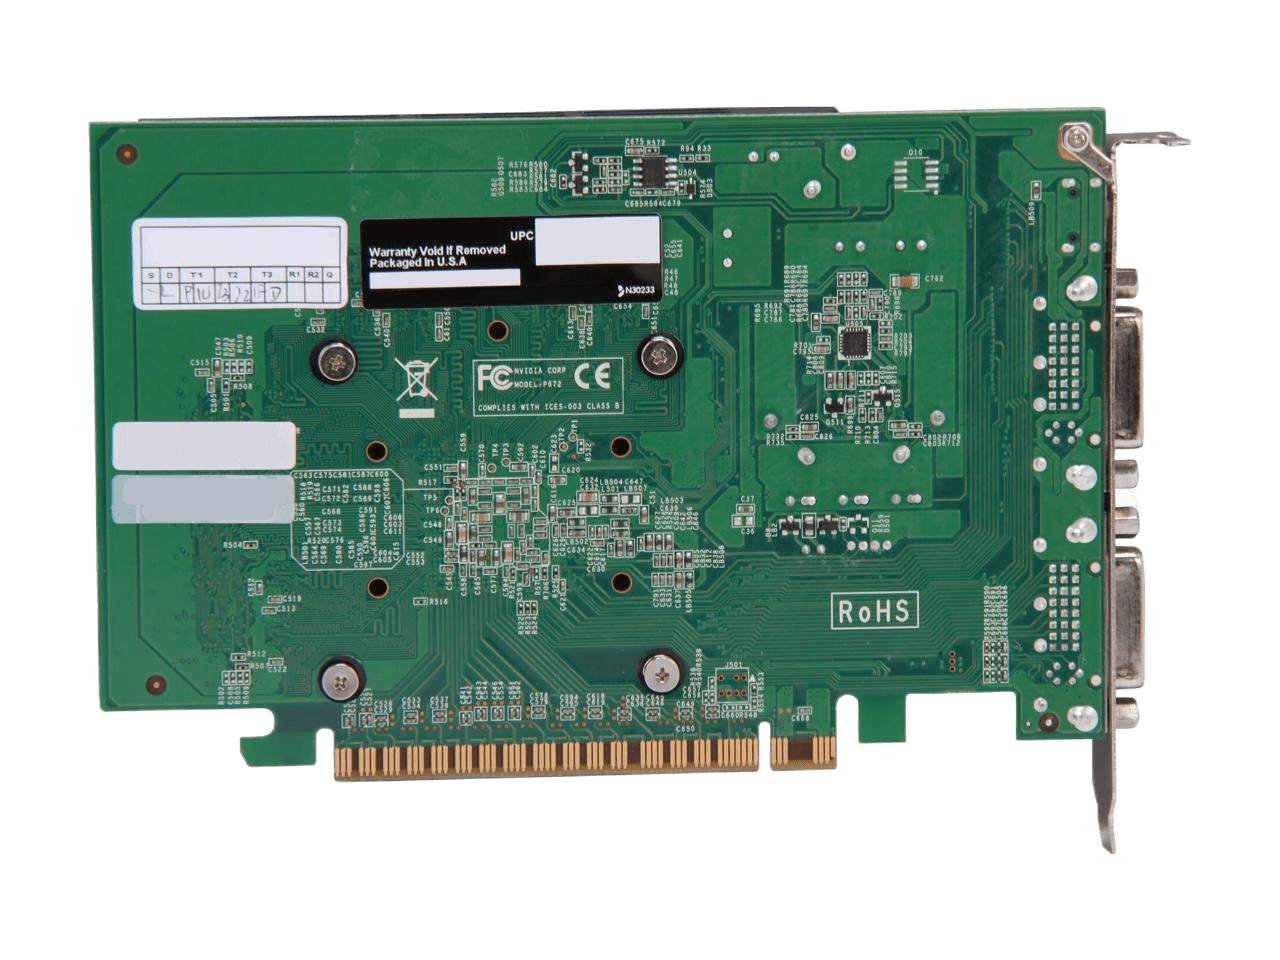 EVGA GeForce GT 630 1GB DDR3 PCI Express 2.0 x16 Video Card 01G-P3-2631-RX